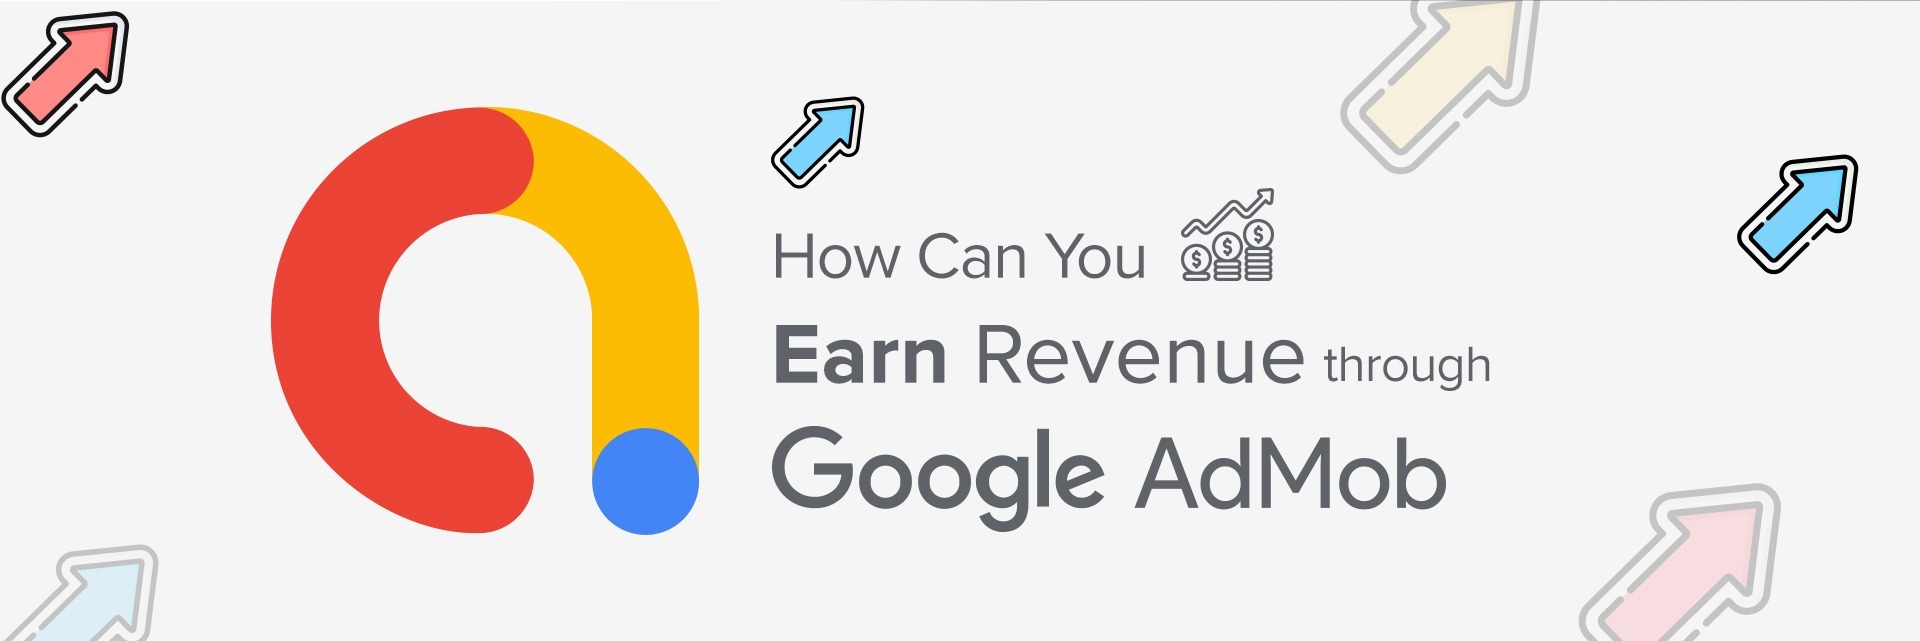 How Can You Earn Revenue Through Google AdMob?